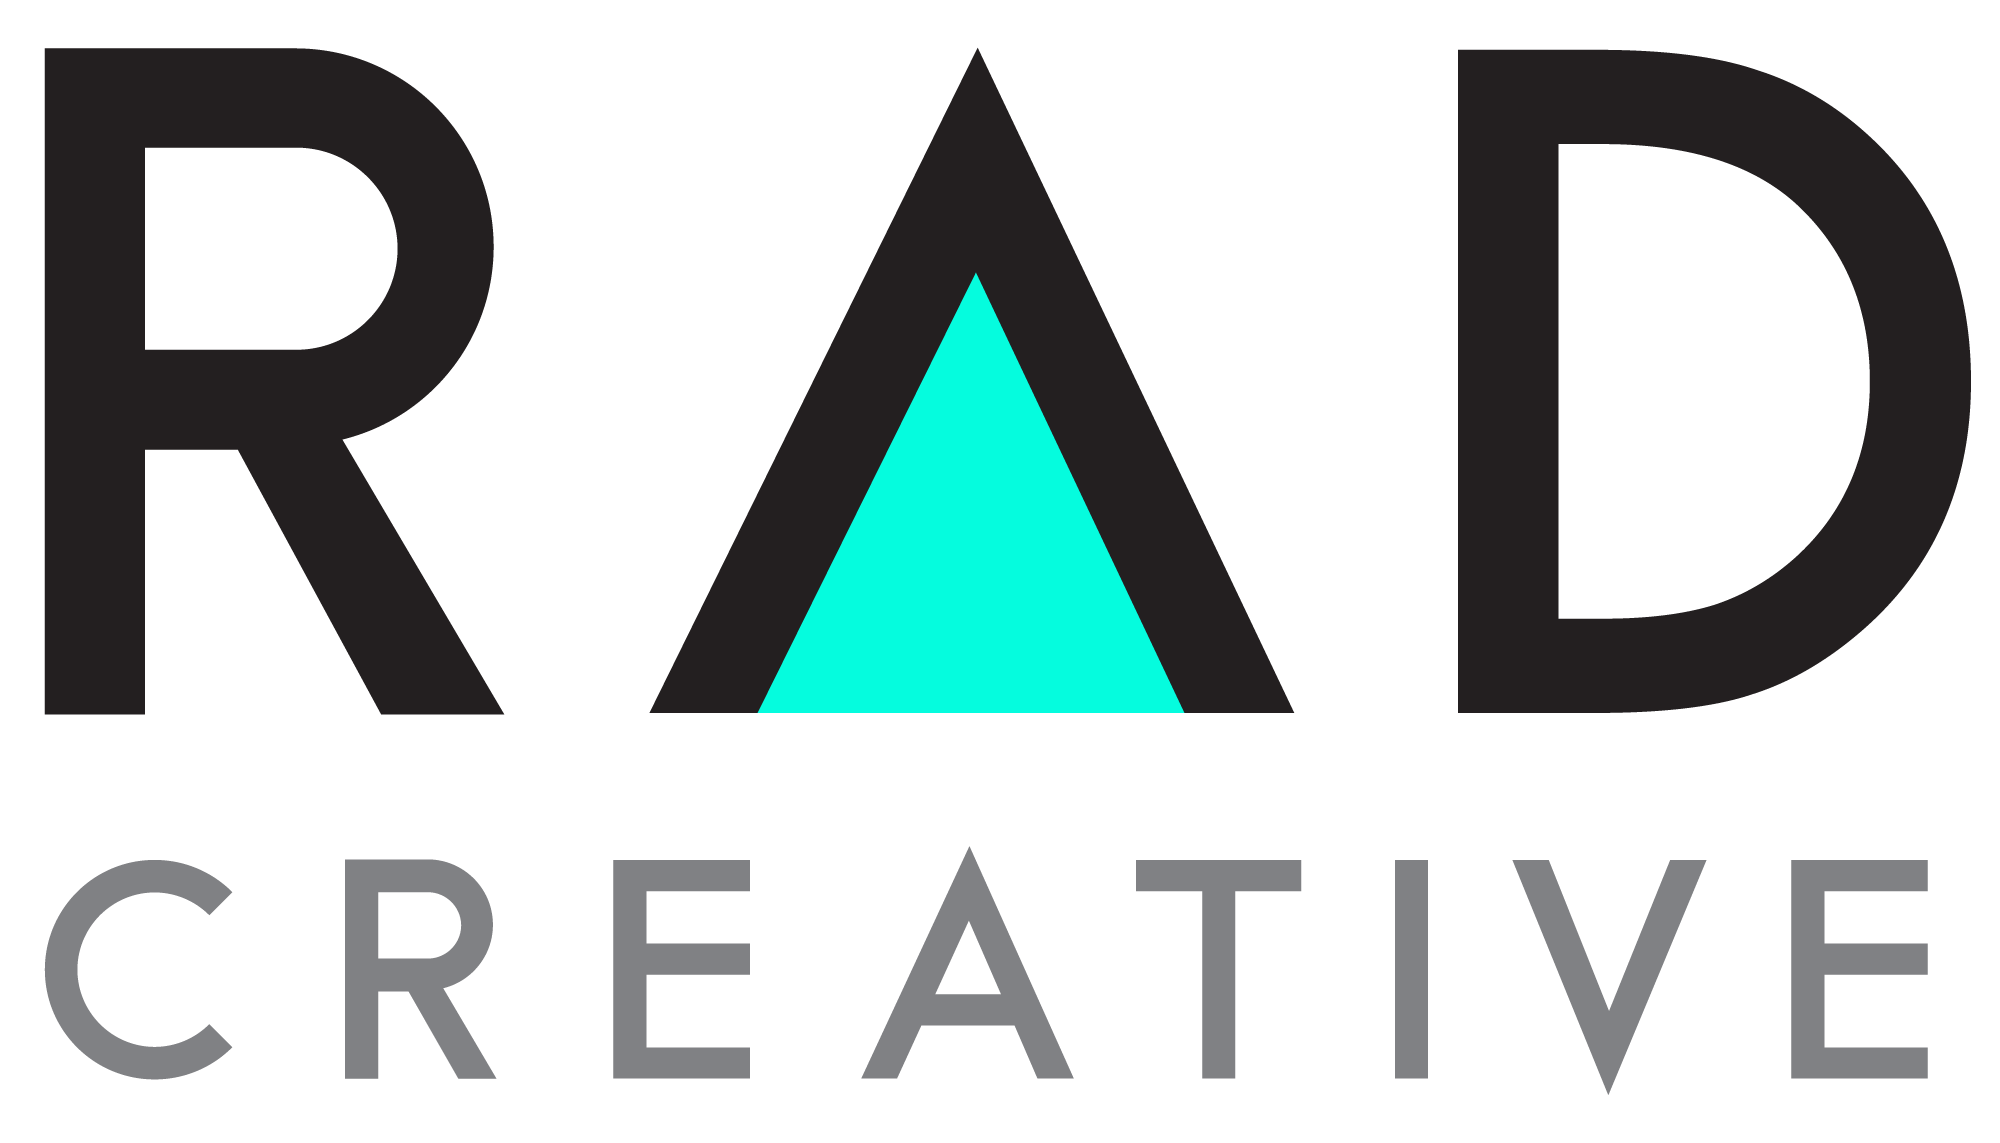 The RAD Creative